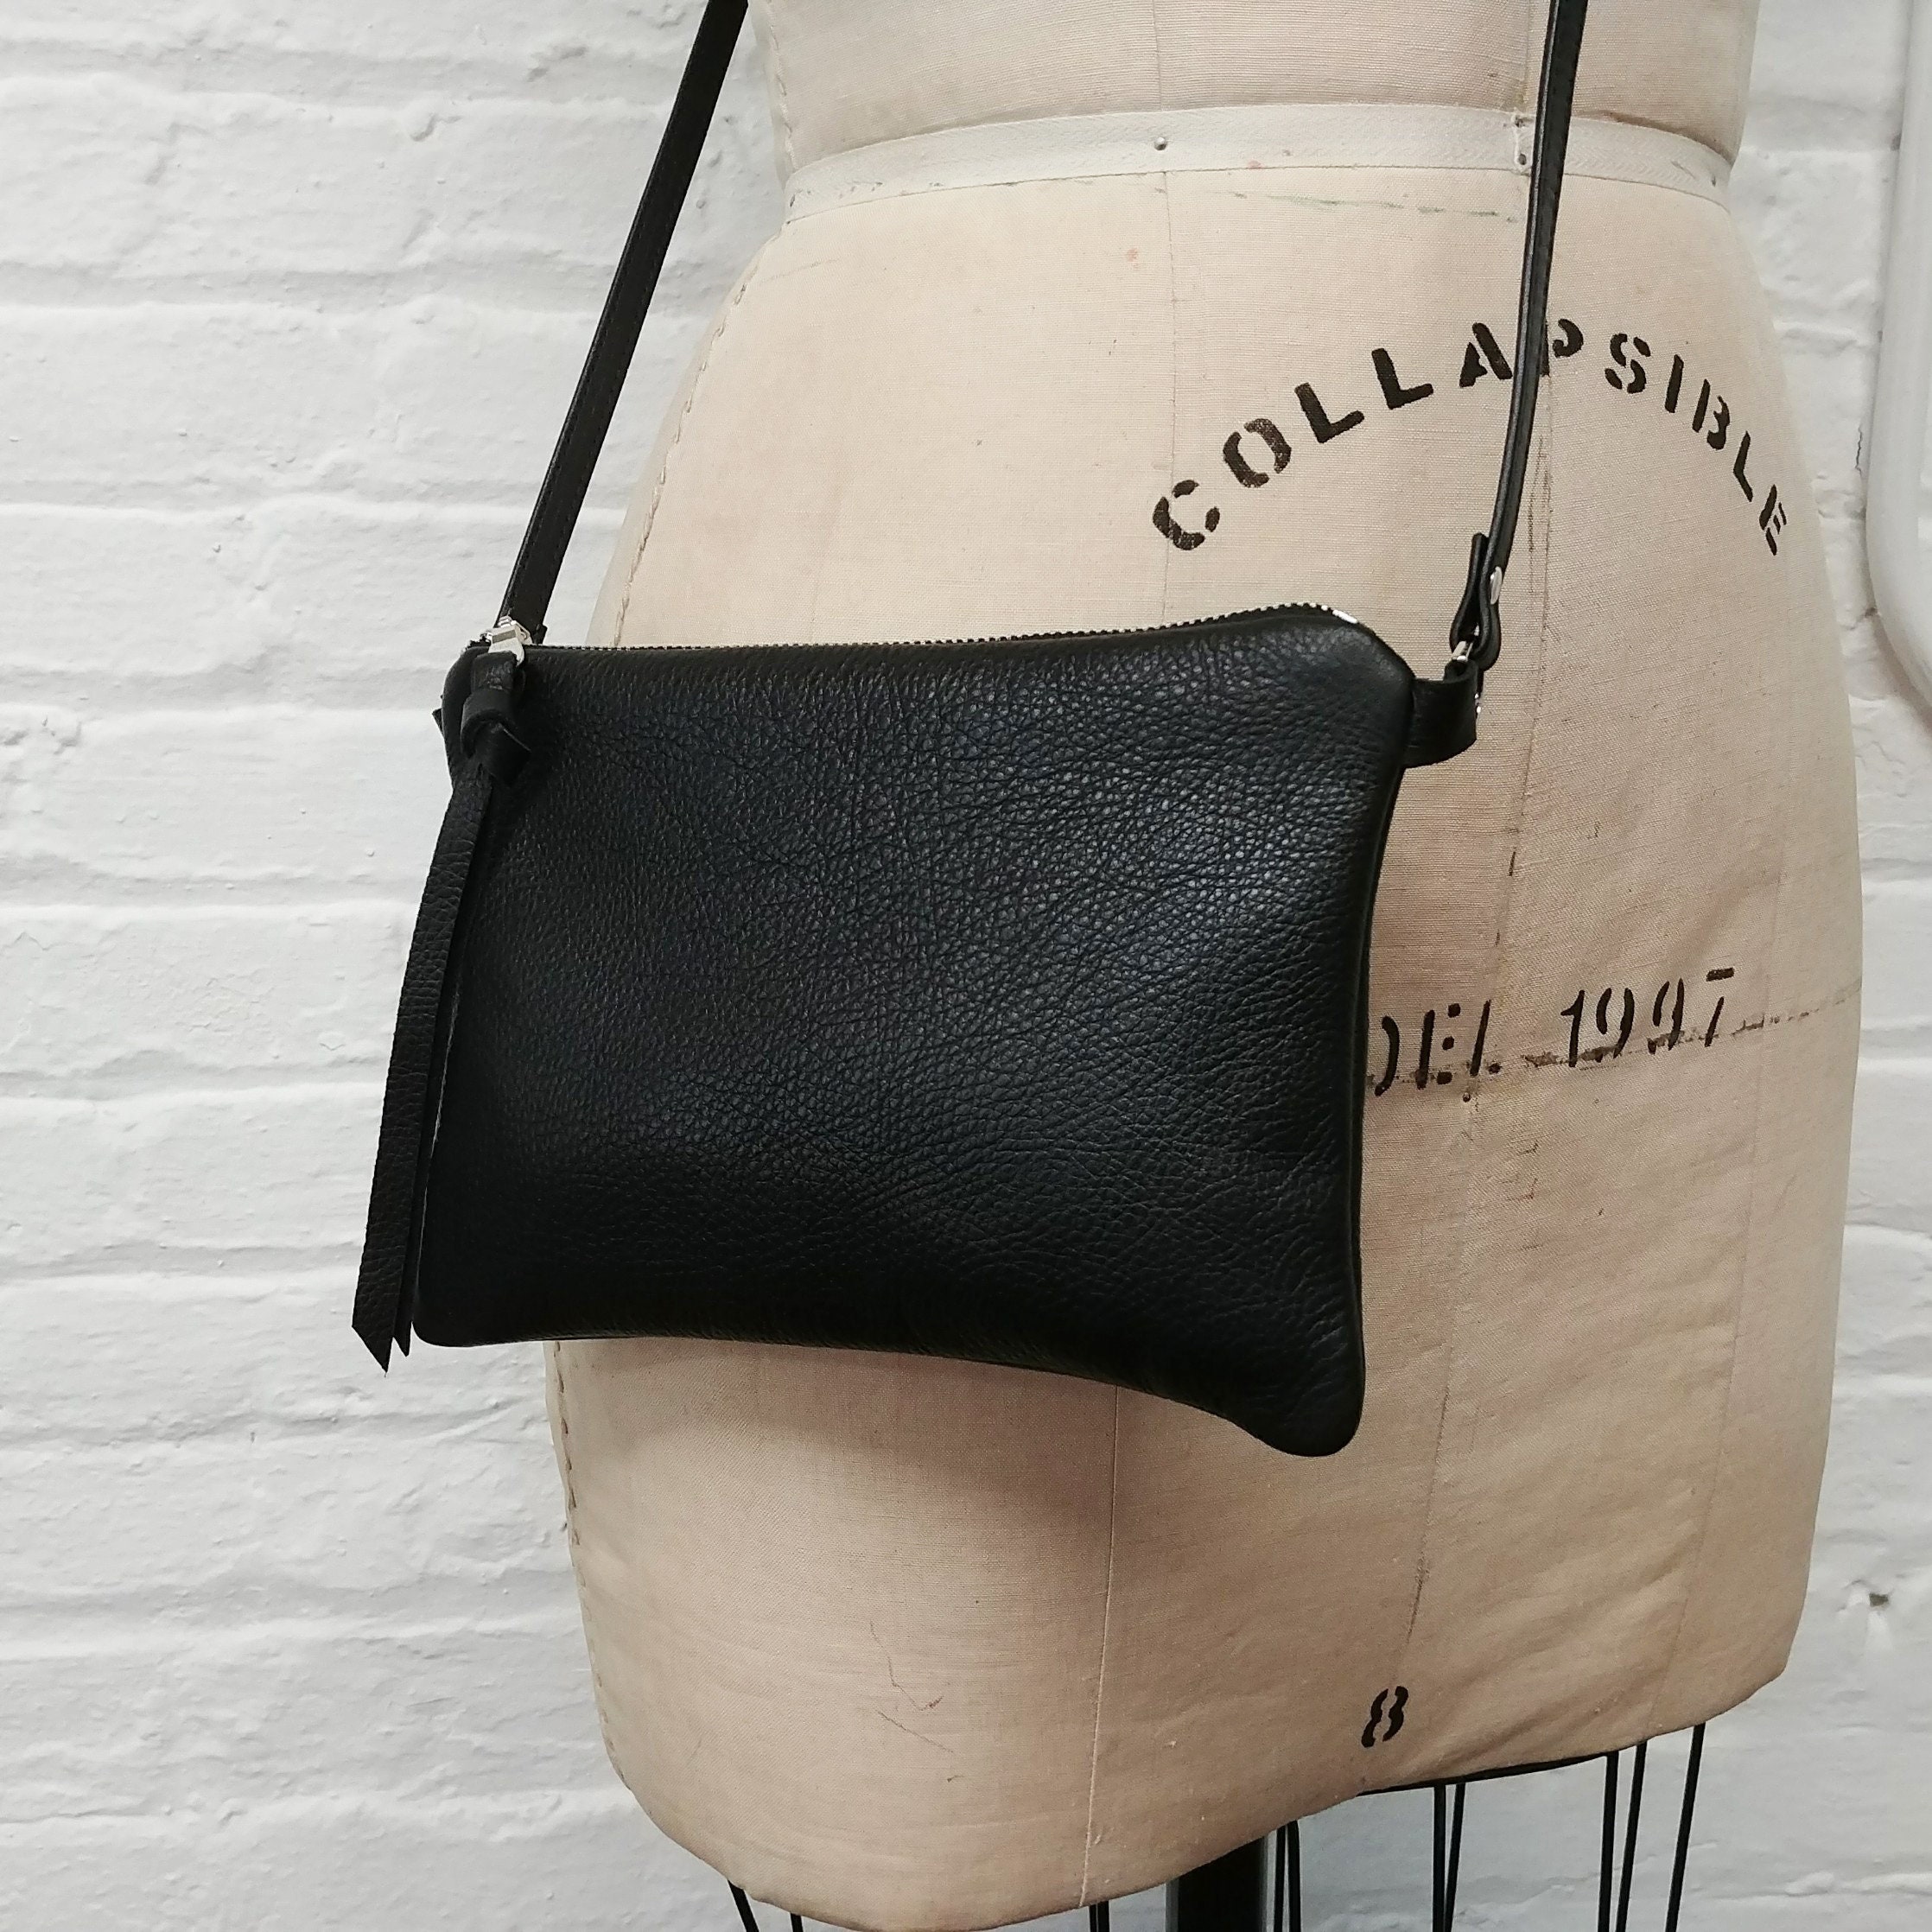 Calfnero Genuine Leather Women's Sling Bag (LV-01-Red) – www